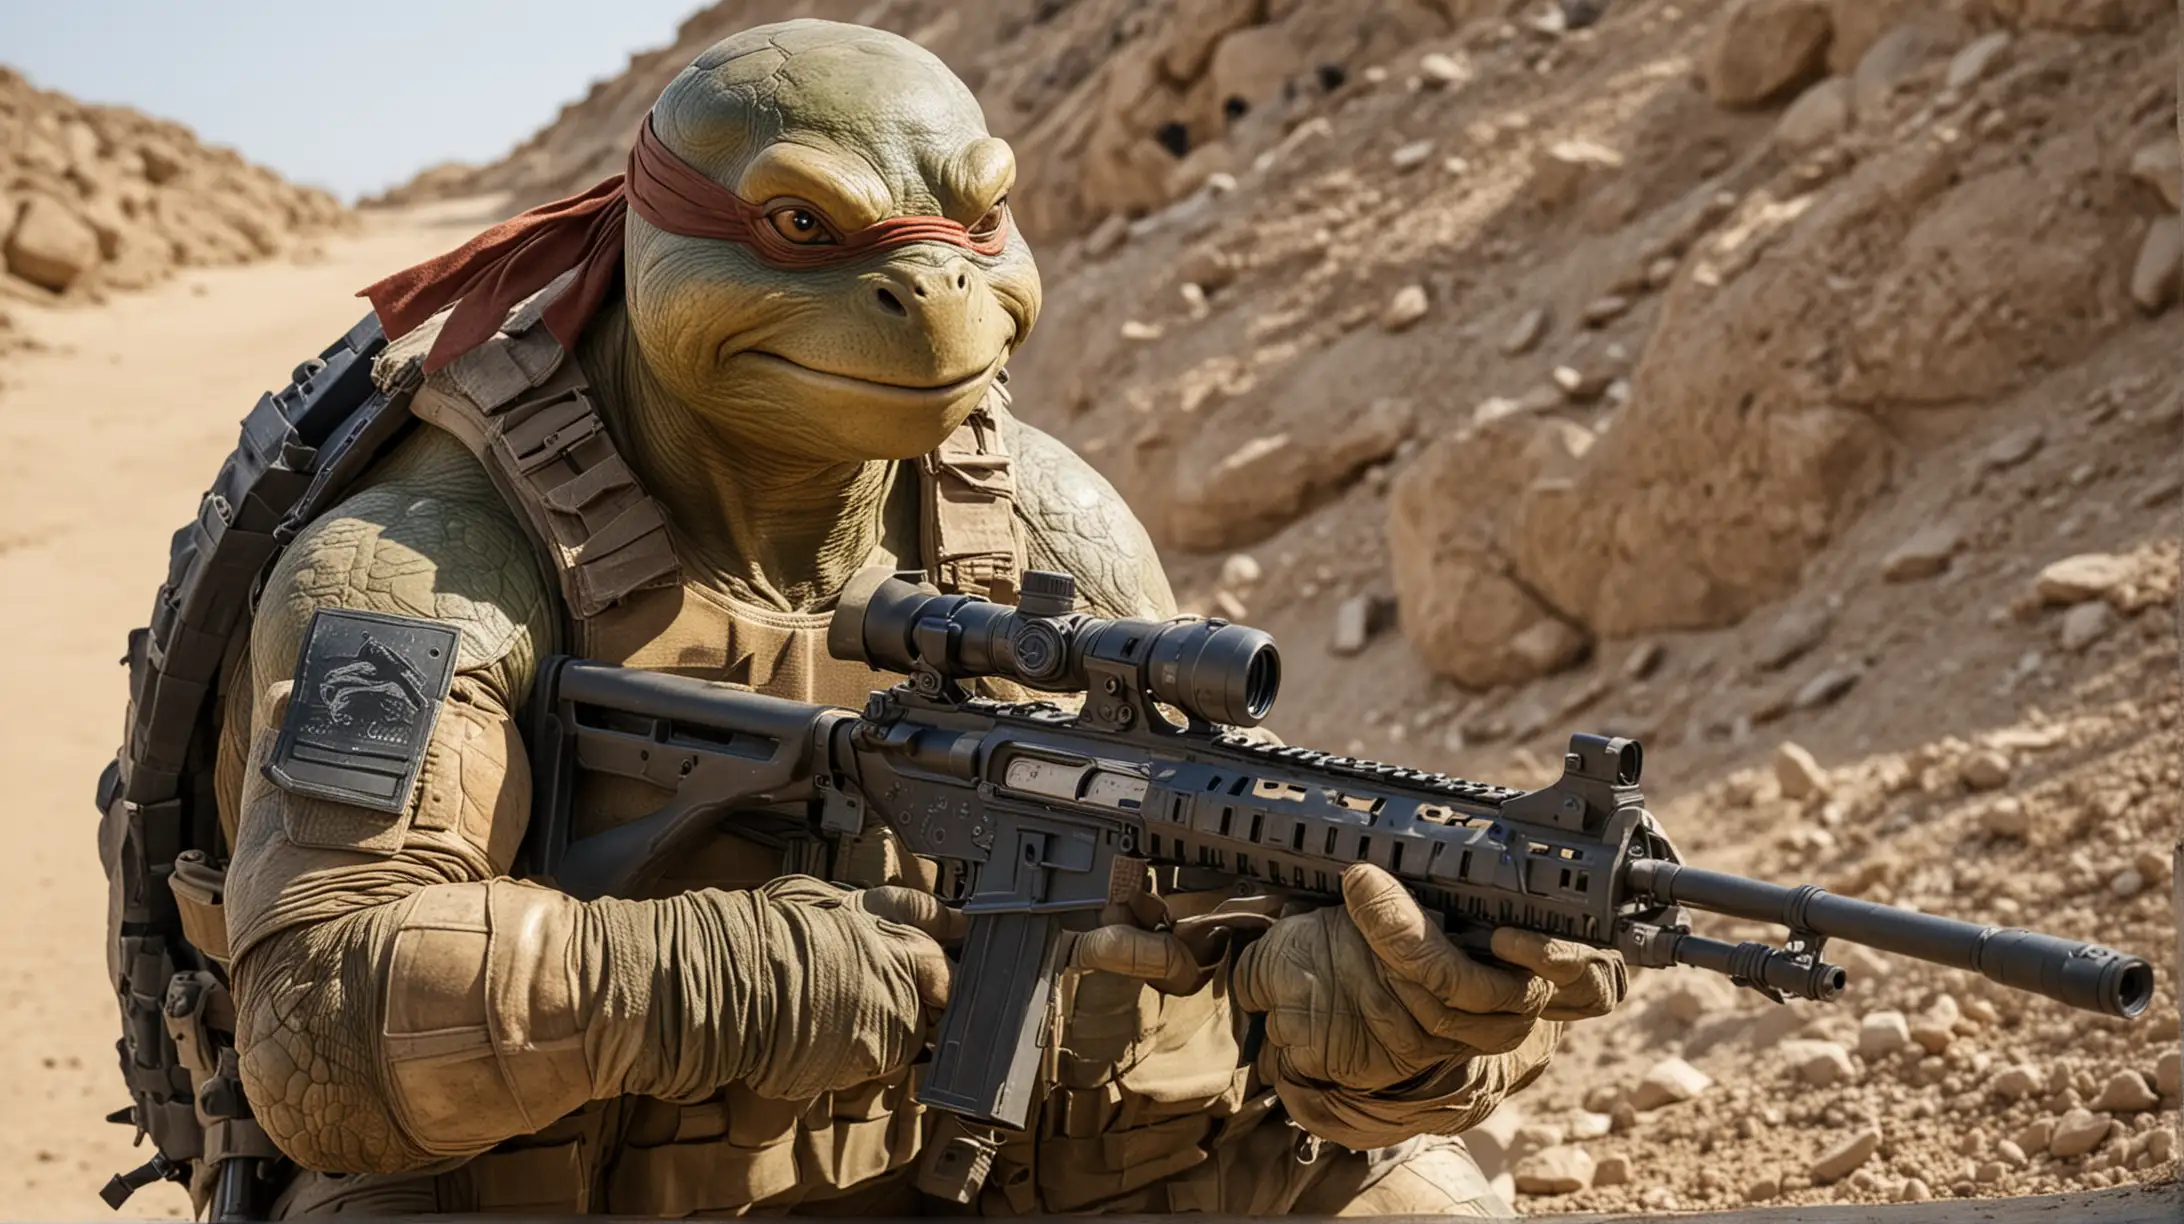 Leonardo Ninja Turtle Navy SEAL Sniper in Afghanistan